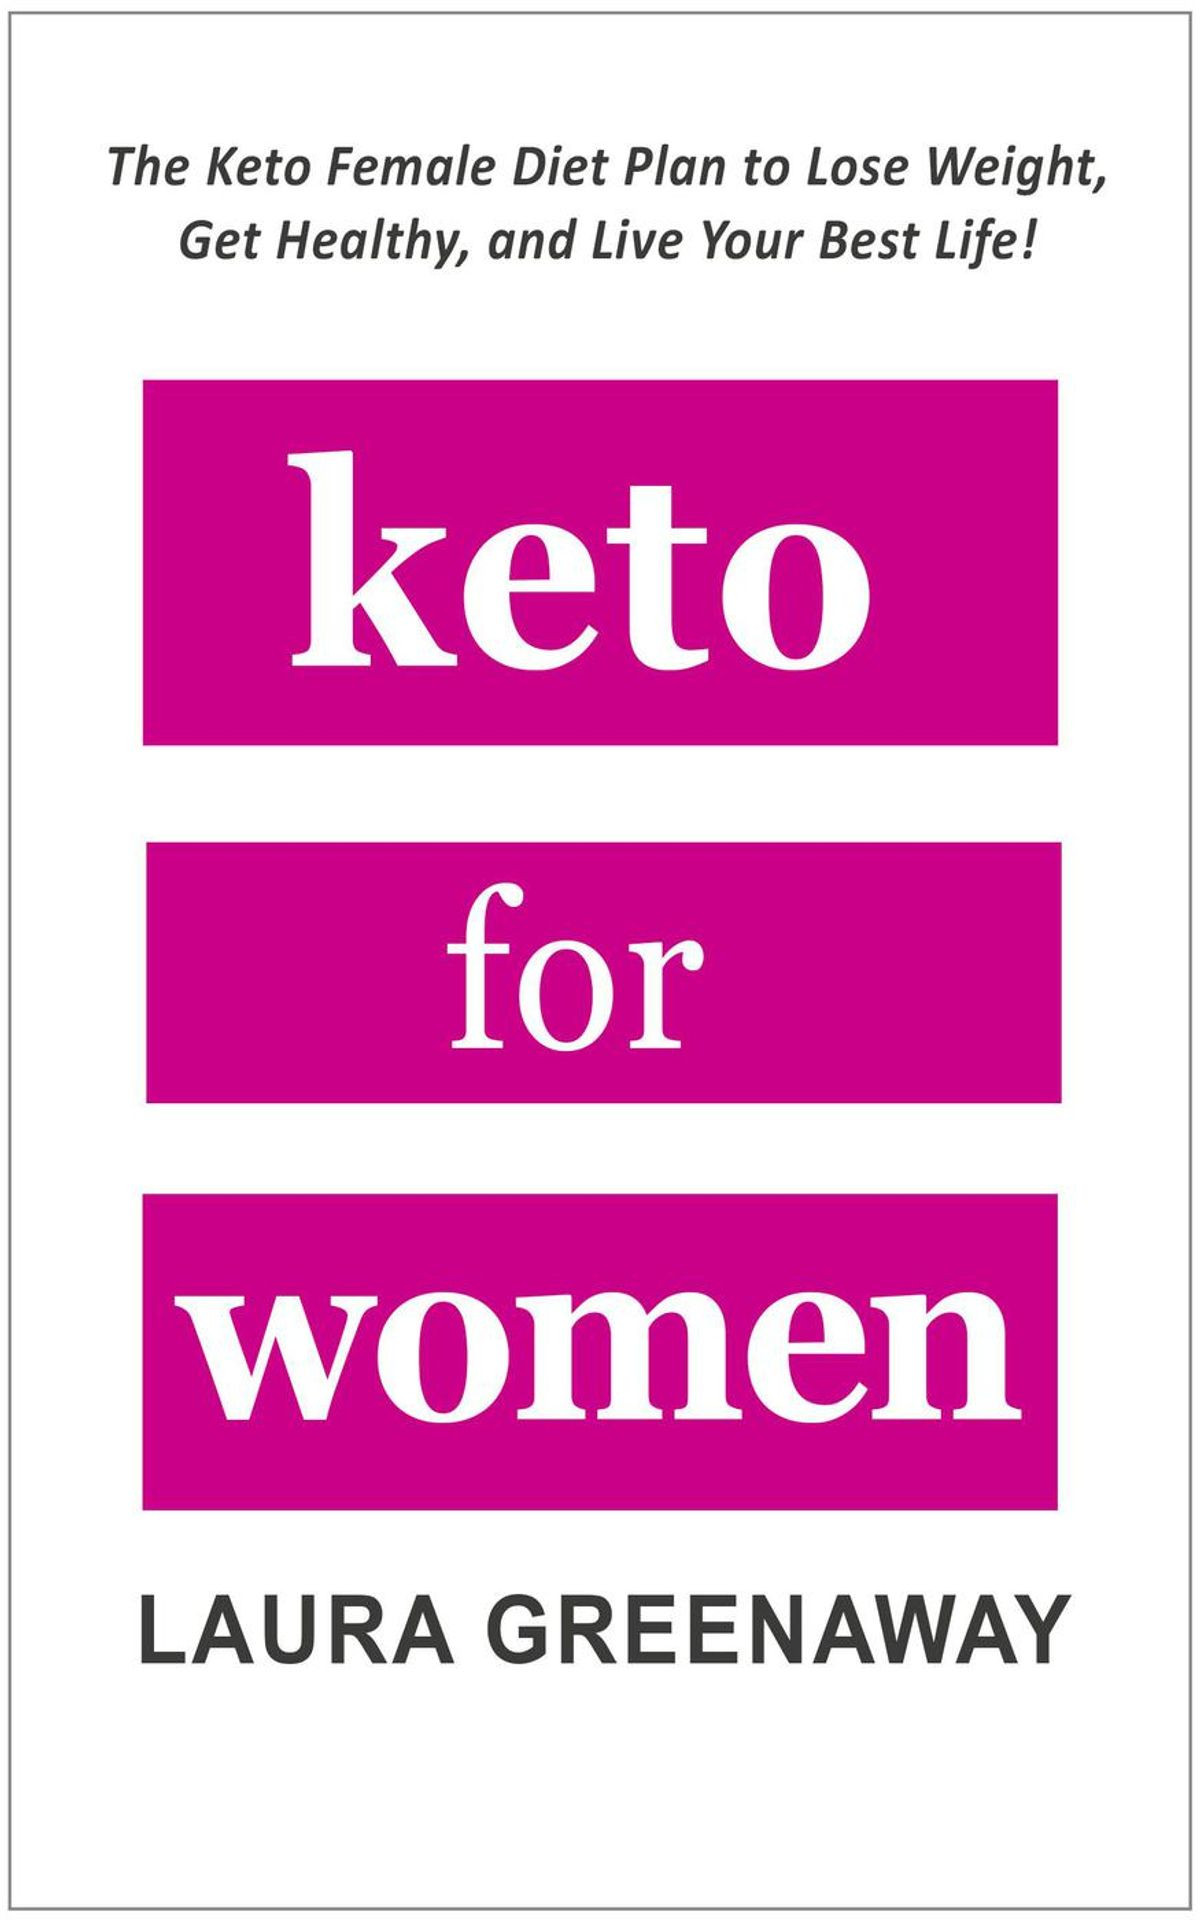 Keto Diet Plan Keto Diet Plans To Lose Weight For Women Keto for Women The Keto Female Diet Plan to Lose Weight